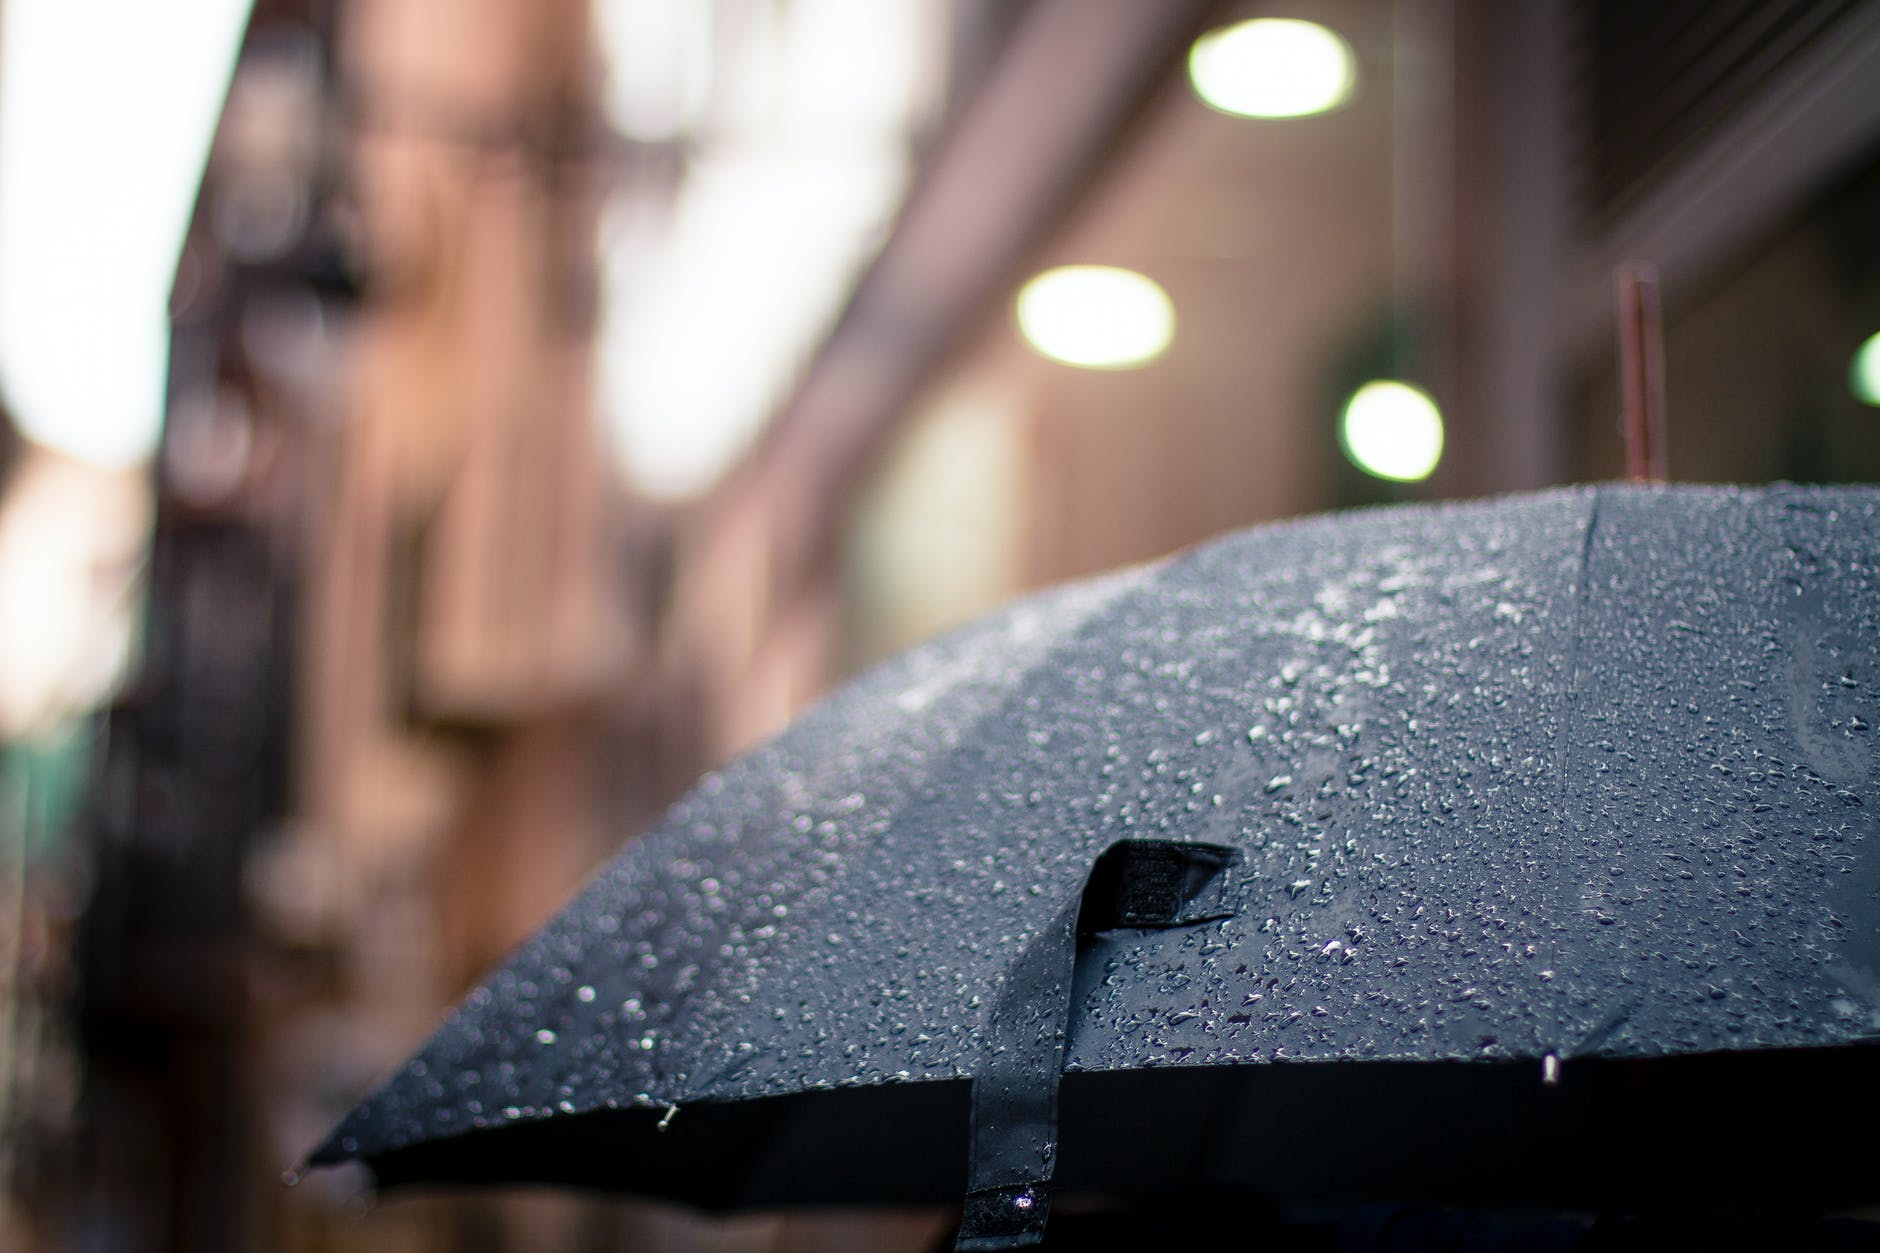 raindrops on umbrella